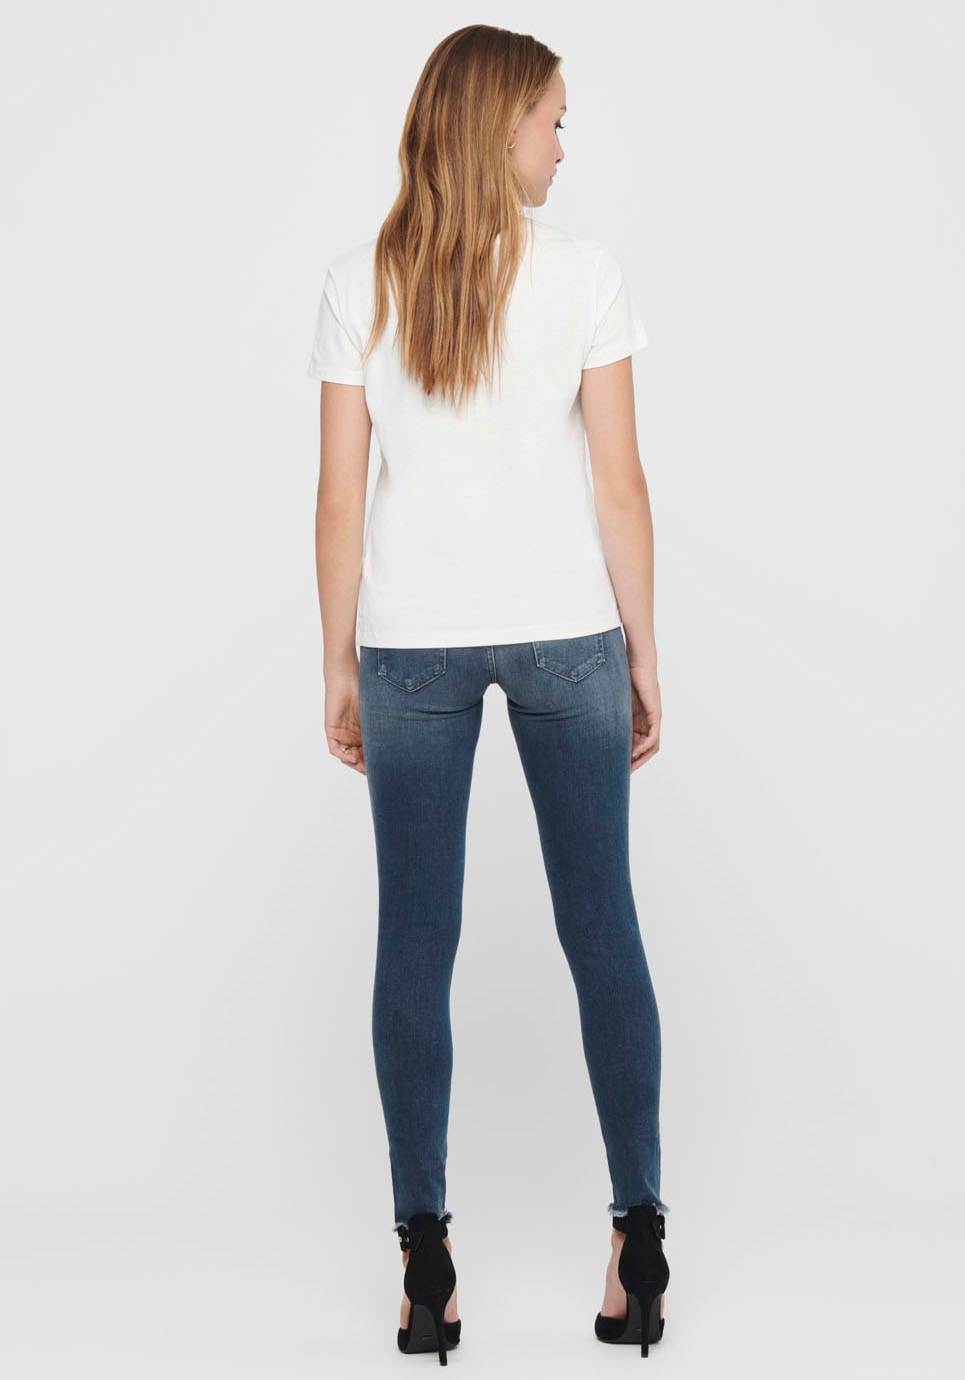 ONLY Ankle-Jeans »ONLBLUSH«, mit Fransensaum